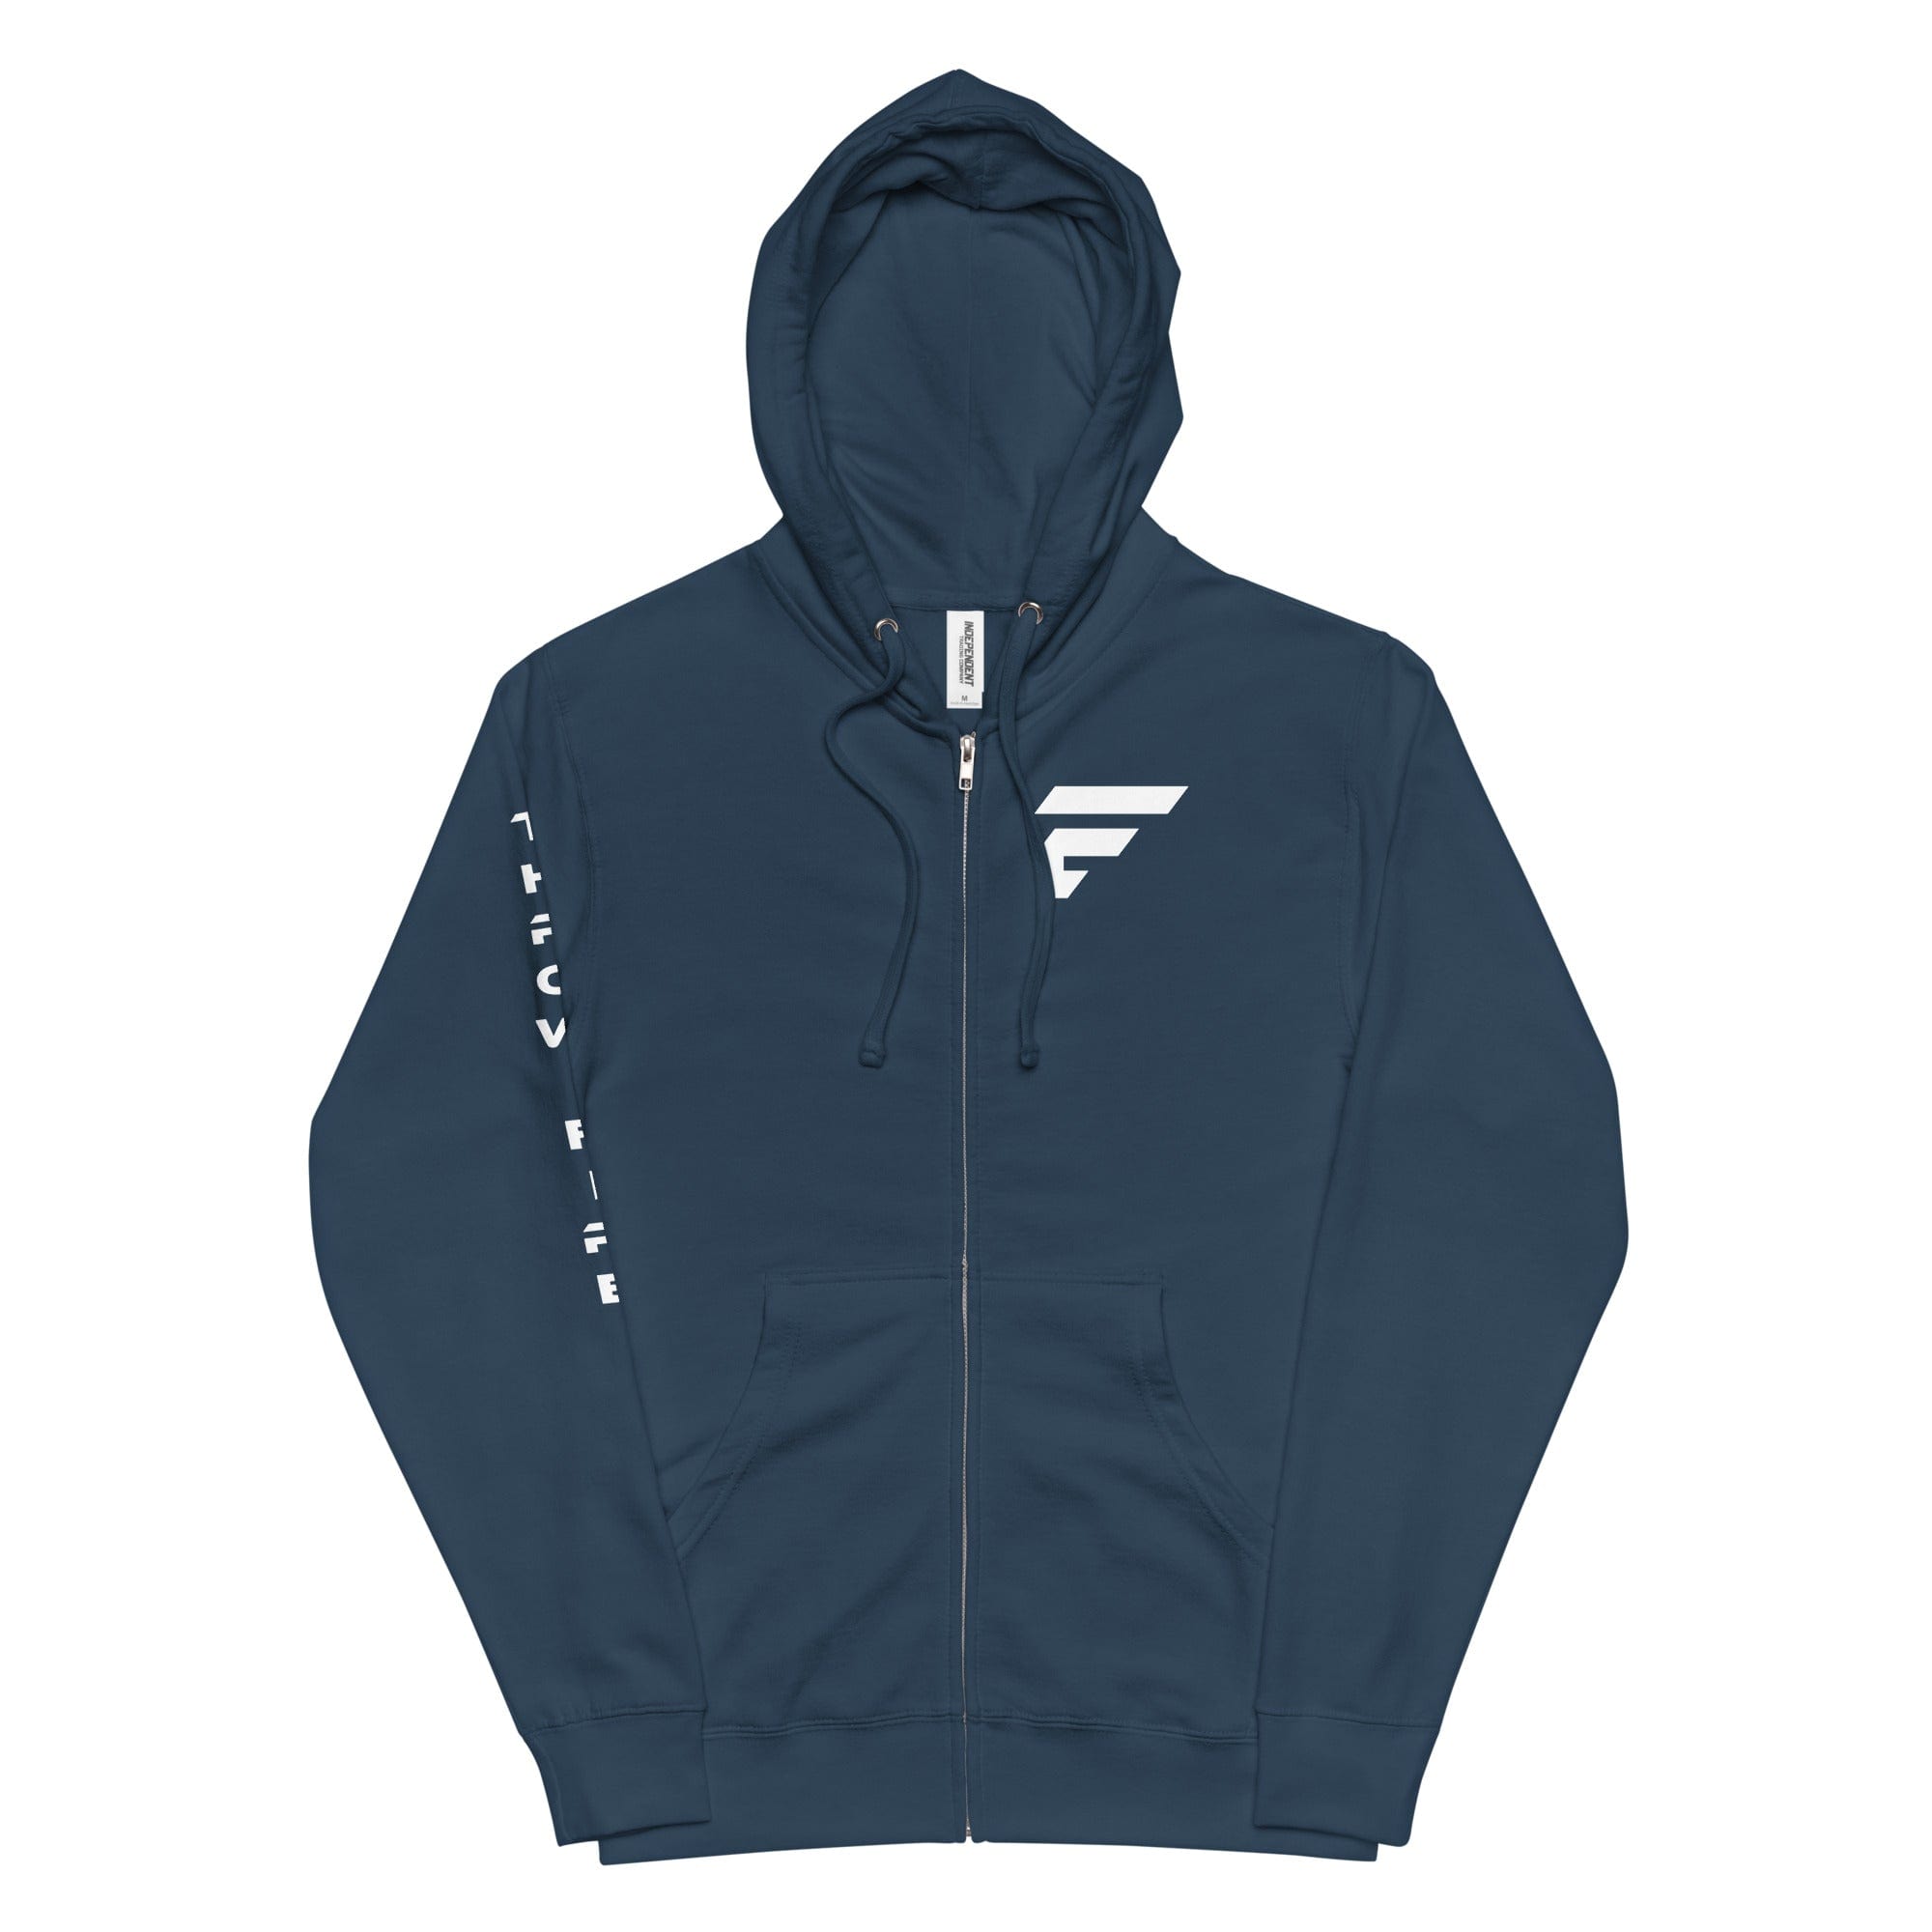 Teal unisex fleece zip-up hoodie with Fire Cornhole logo in white